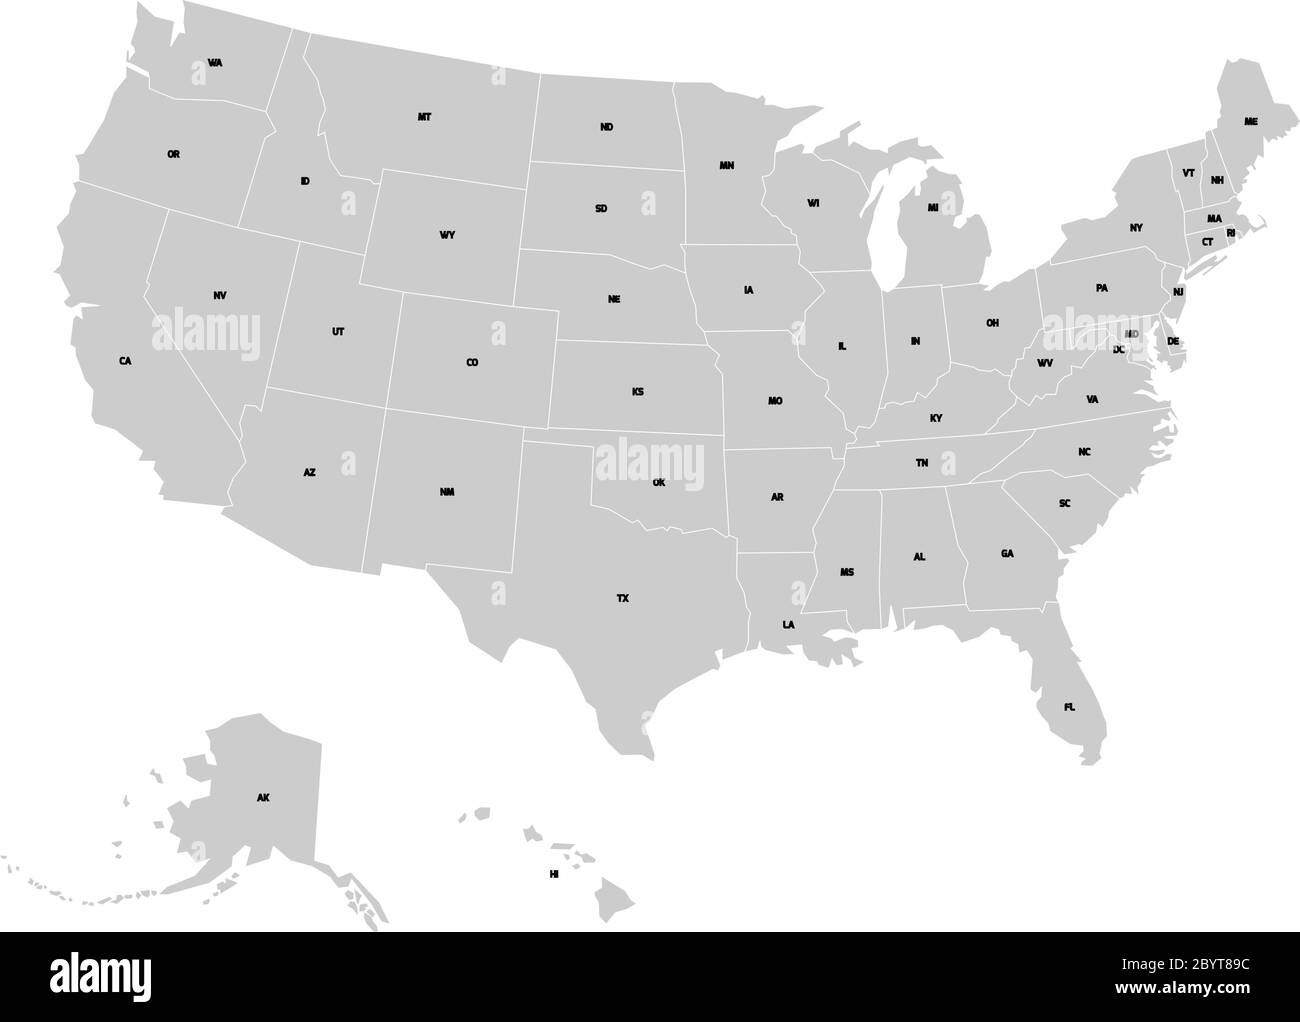 Mapa De Estados Unidos De América Con Códigos De Cada Estado Mapa Vectorial De Grises 2139